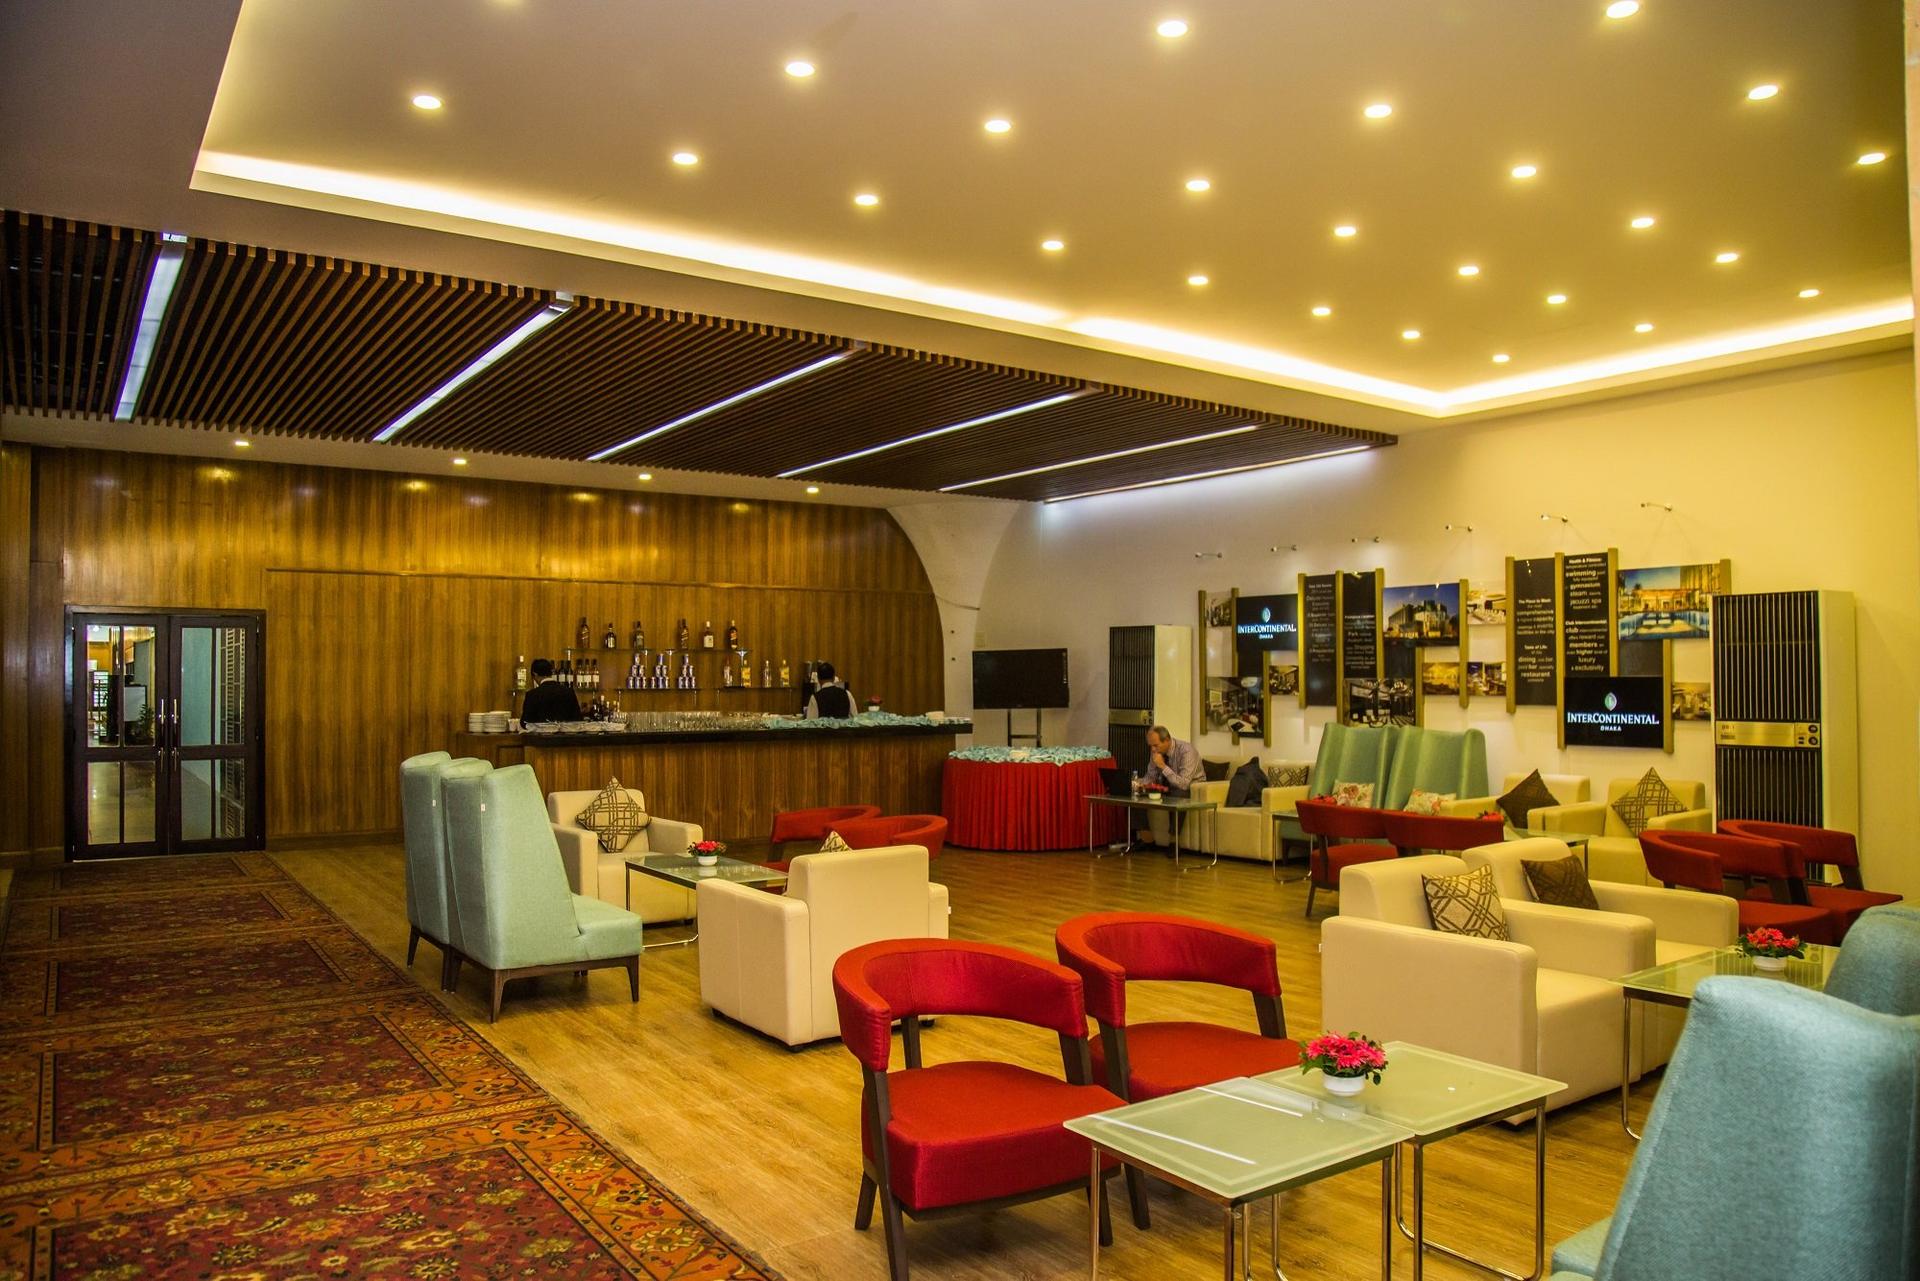 InterContinental Dhaka Balaka Executive Lounge image 1 of 4